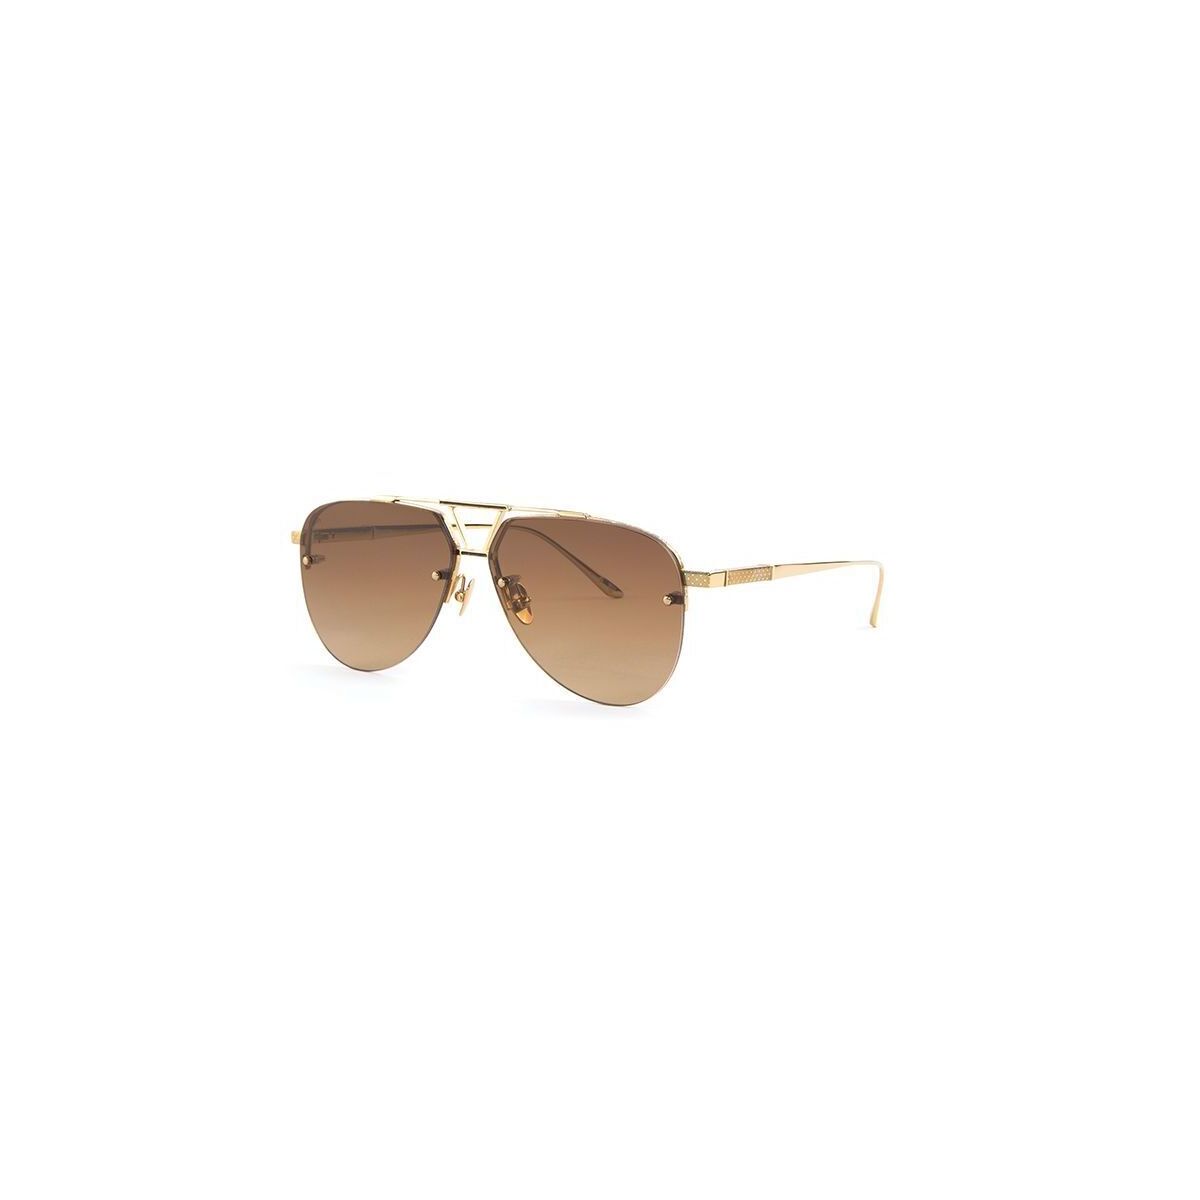 Bandini 18K Gold Sunglasses